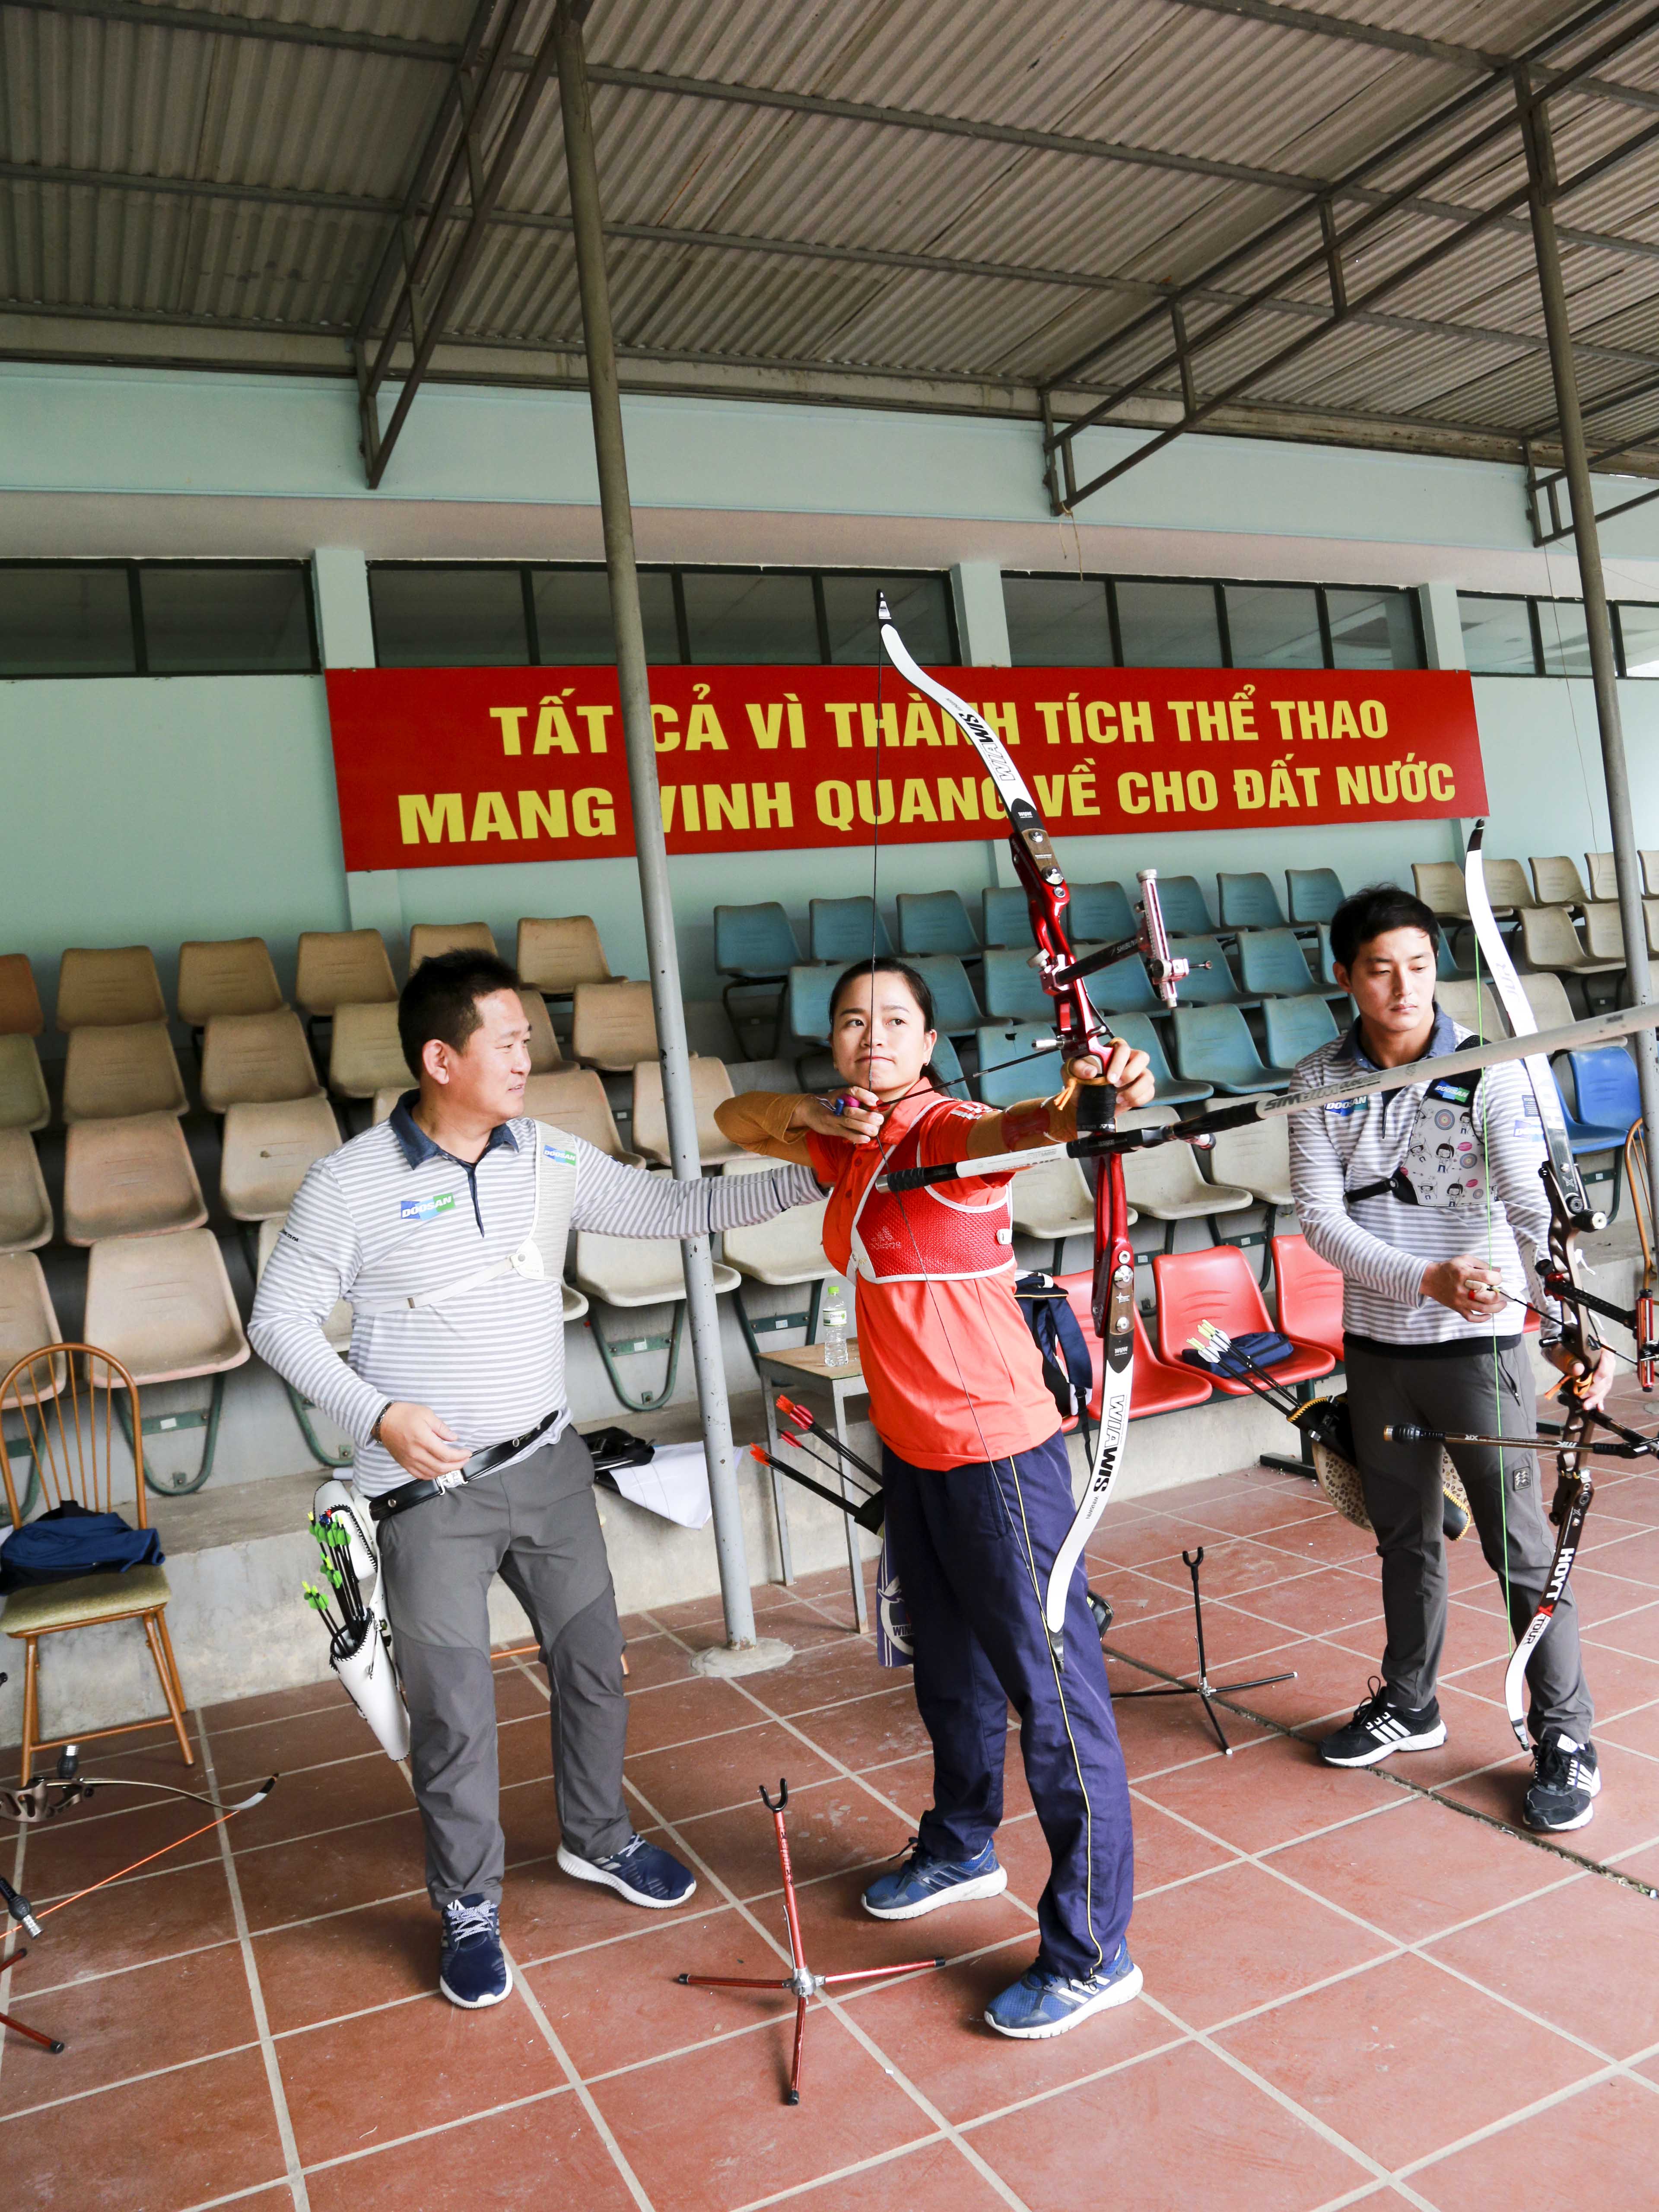 Doosan’s Olympic silver medallist archers to train Vietnamese national team